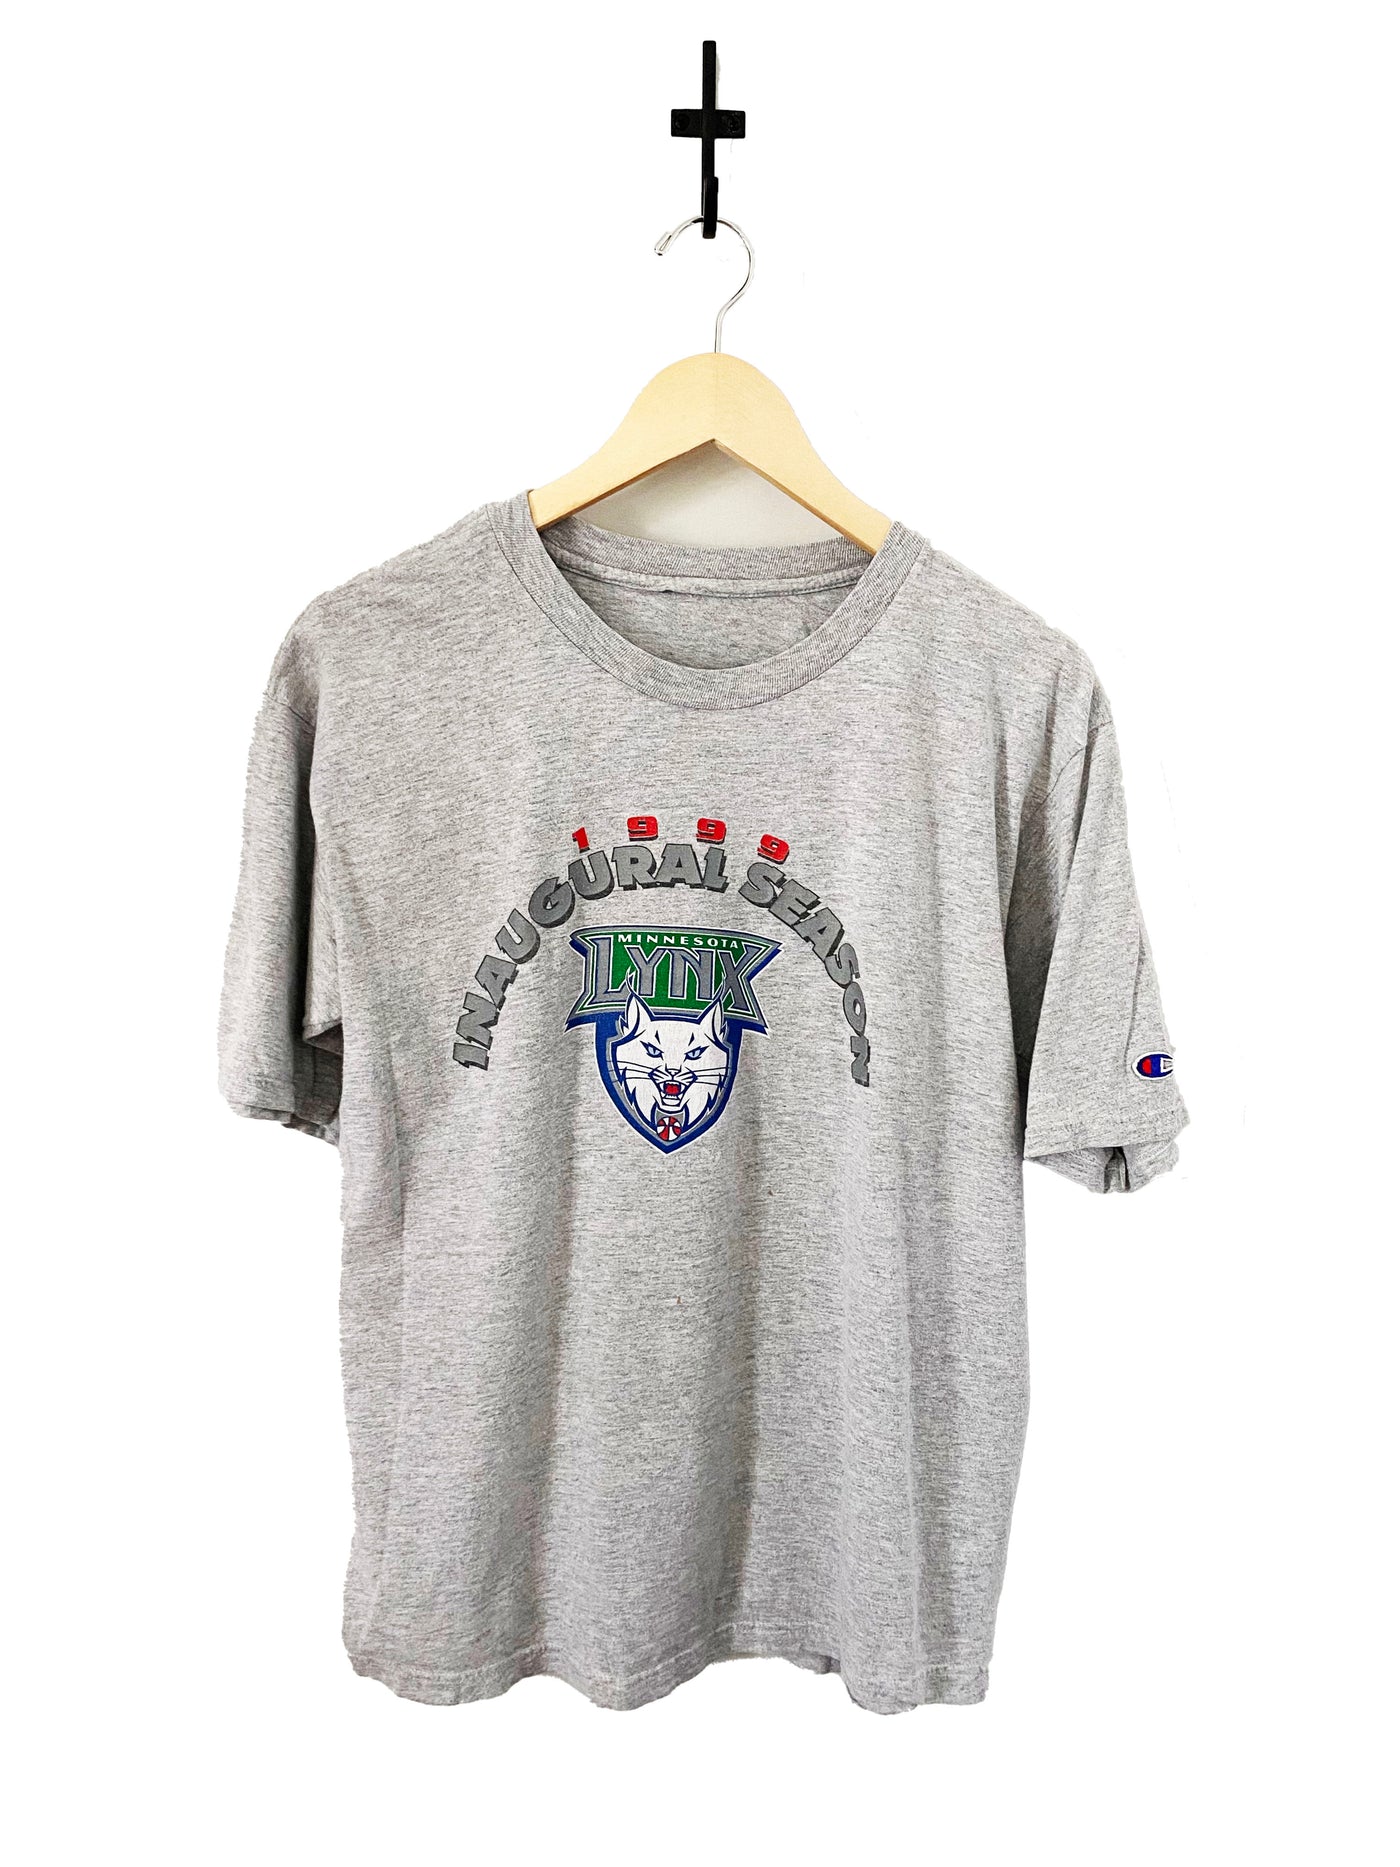 Vintage 1999 Minnesota Lynx T-Shirt